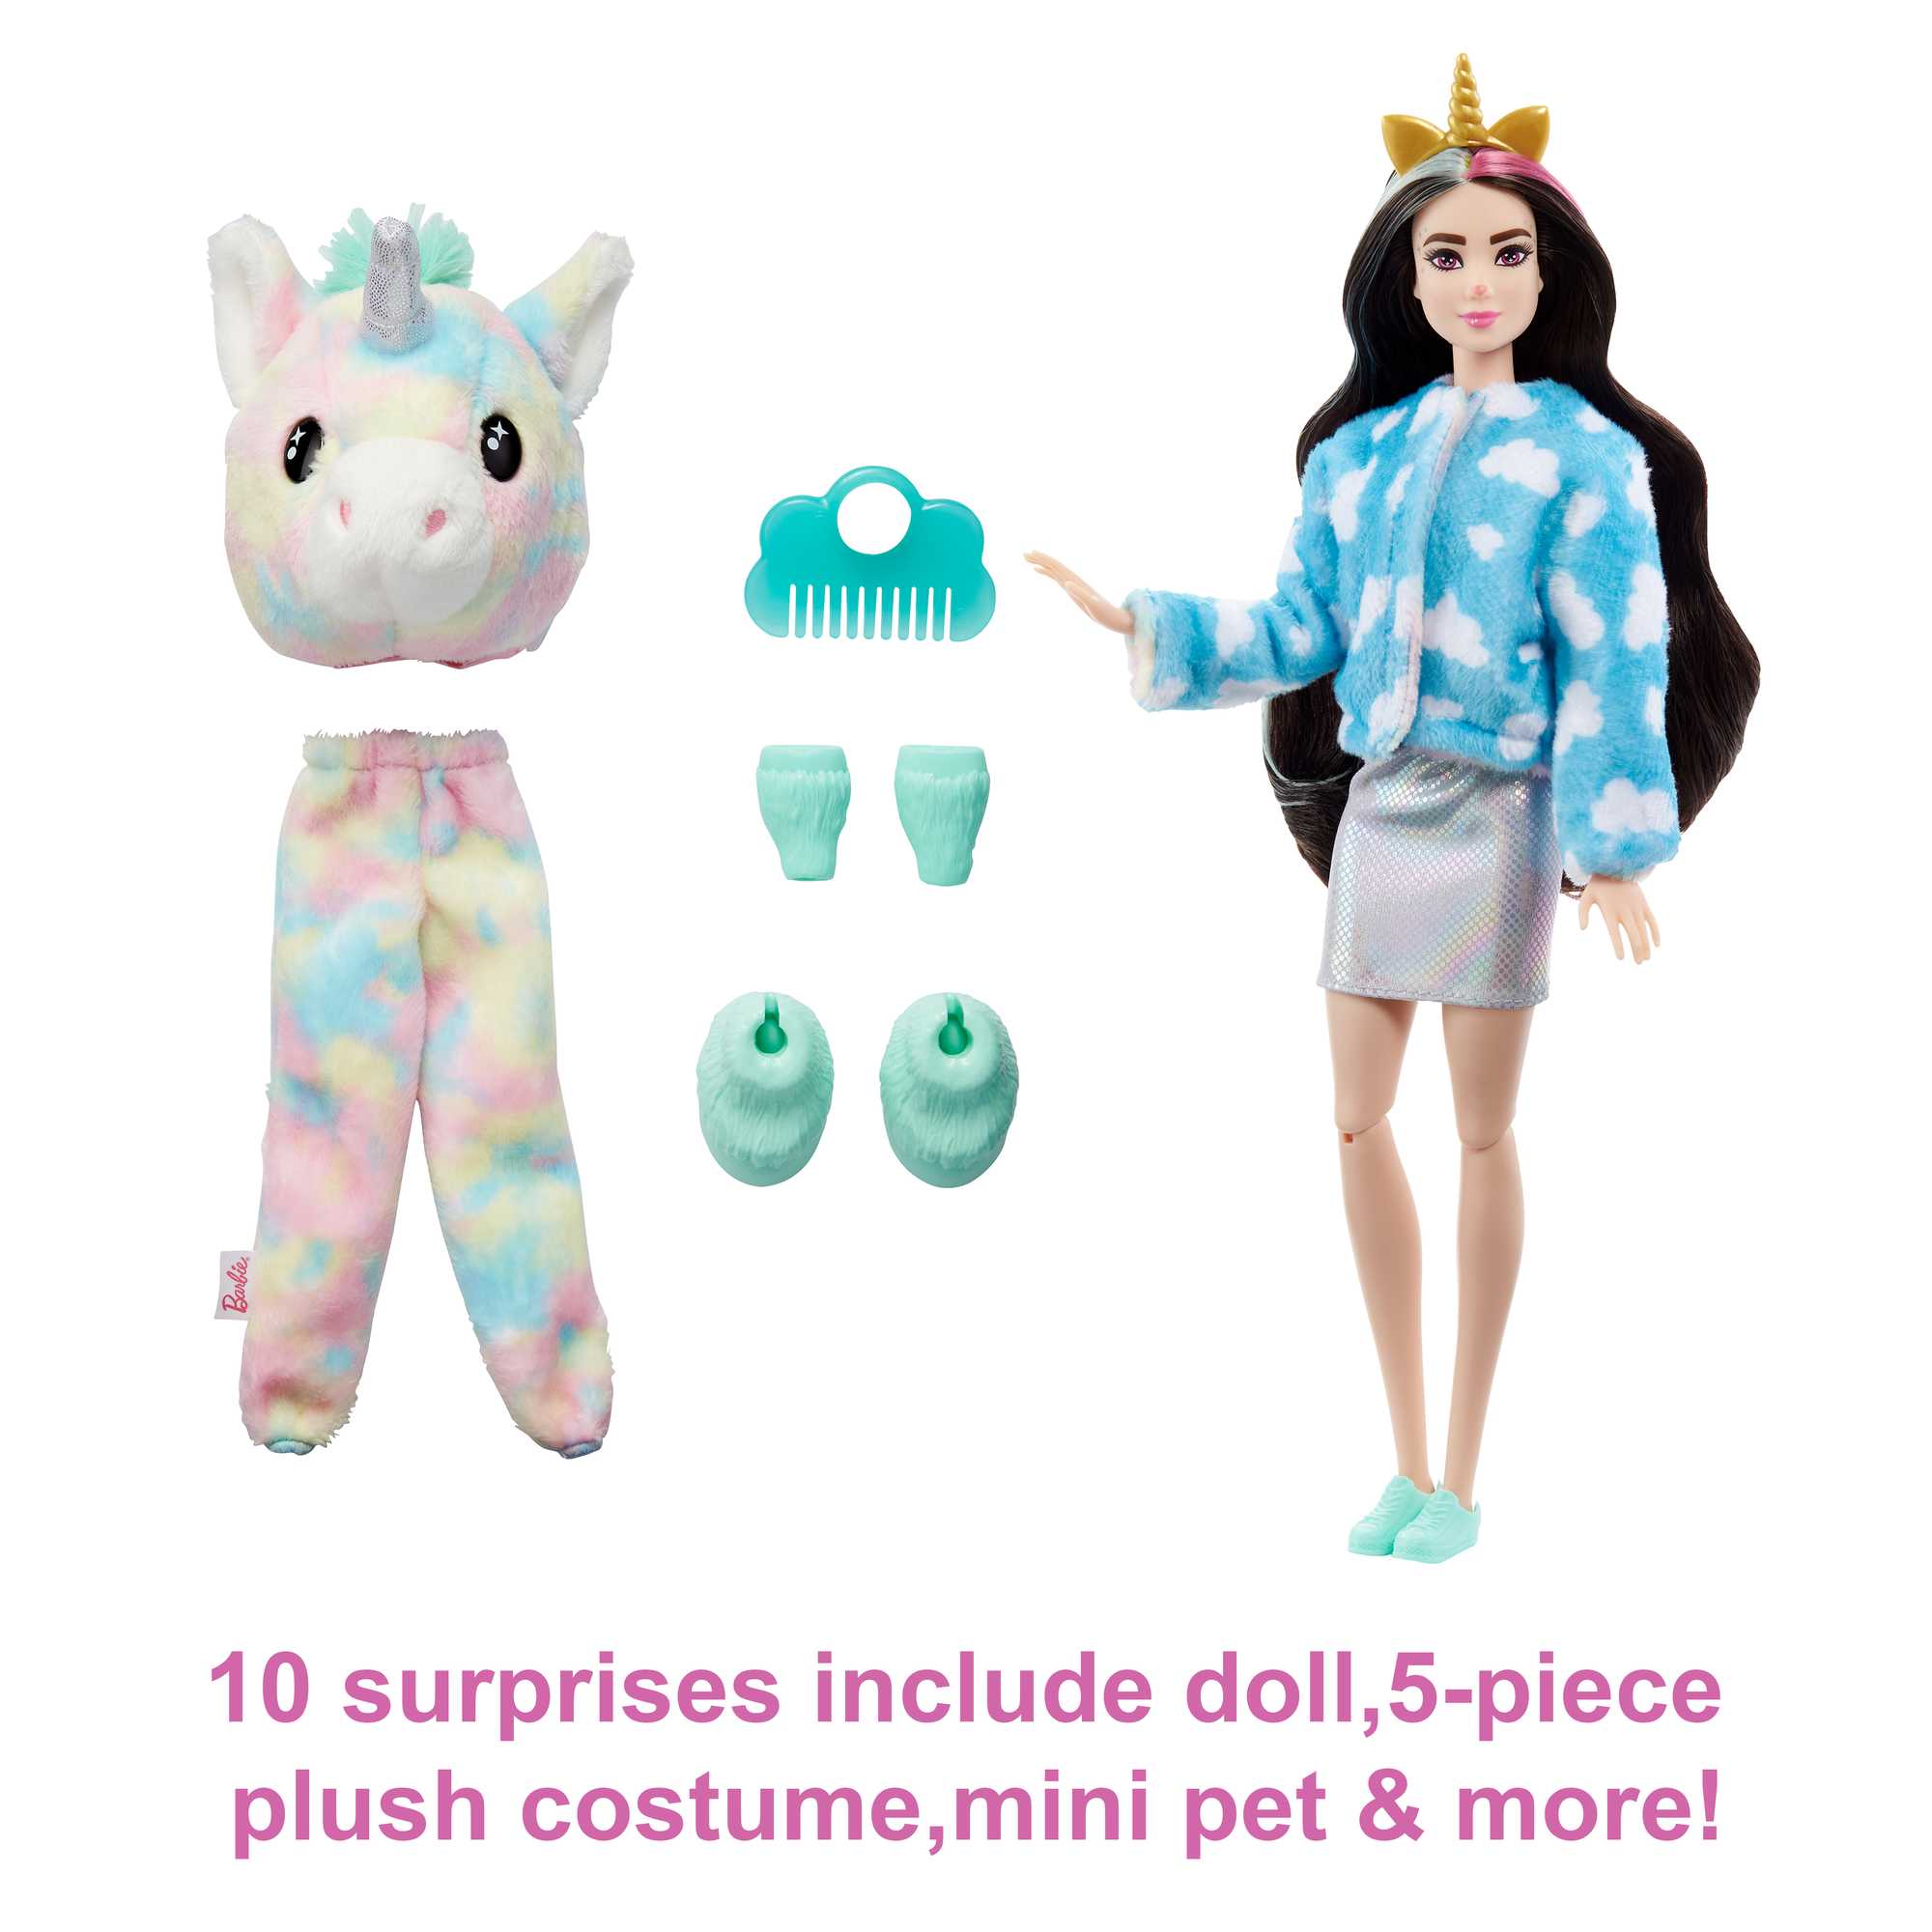 Barbie Cutie Reveal Fantasy Series Doll with Unicorn Plush Costume 